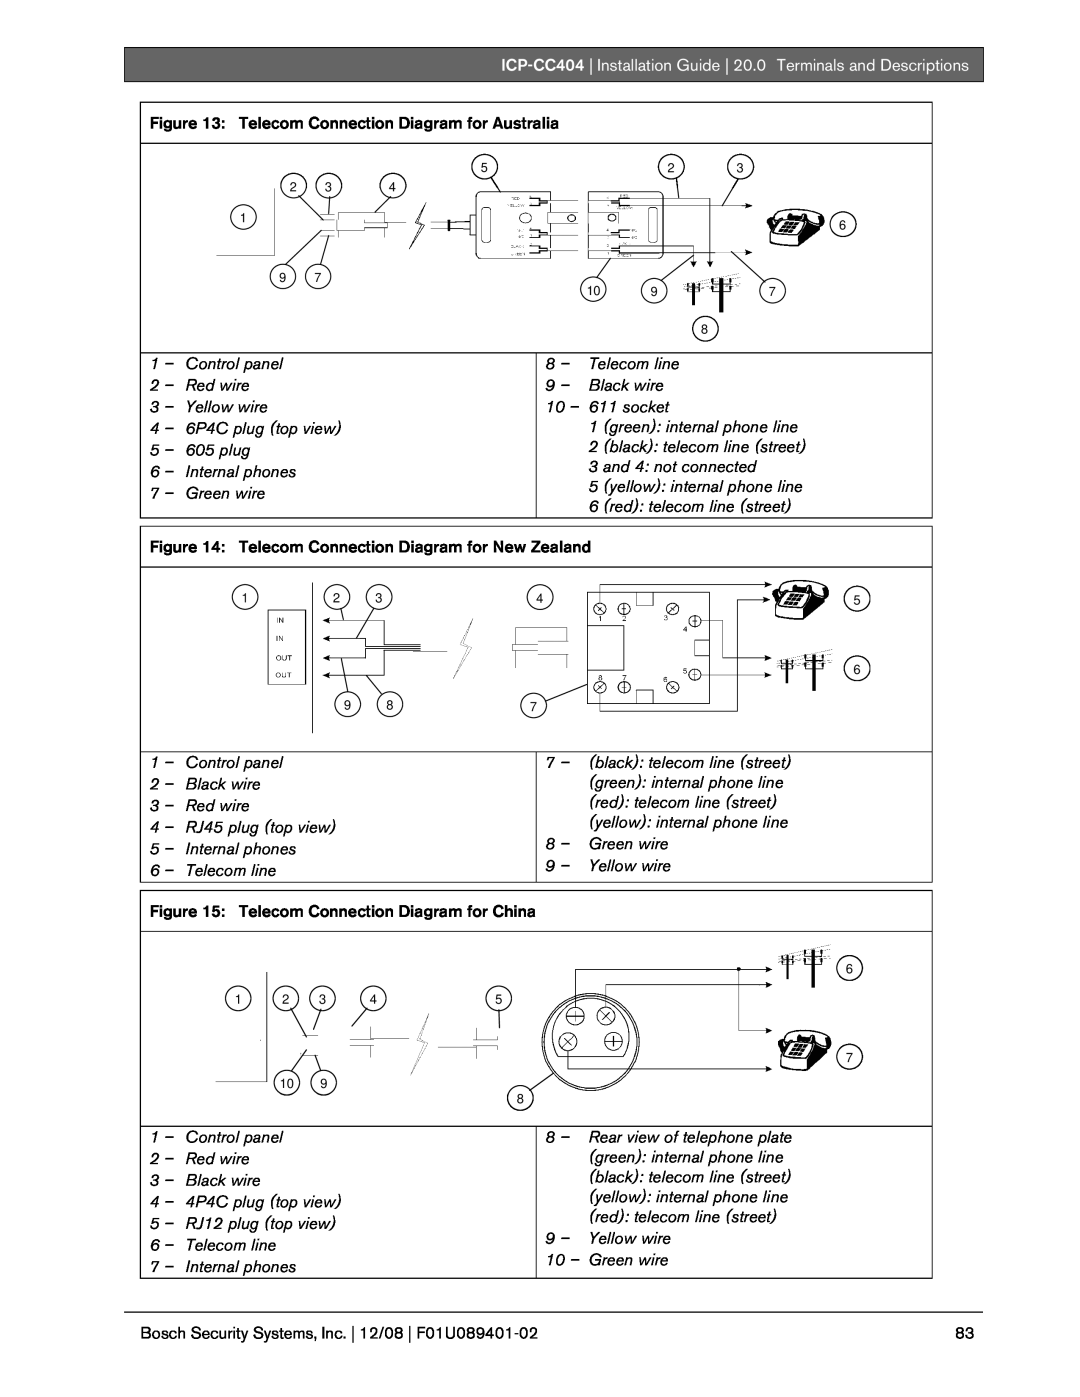 Bosch Appliances ICP-CC404 manual Telecom Connection Diagram for China 